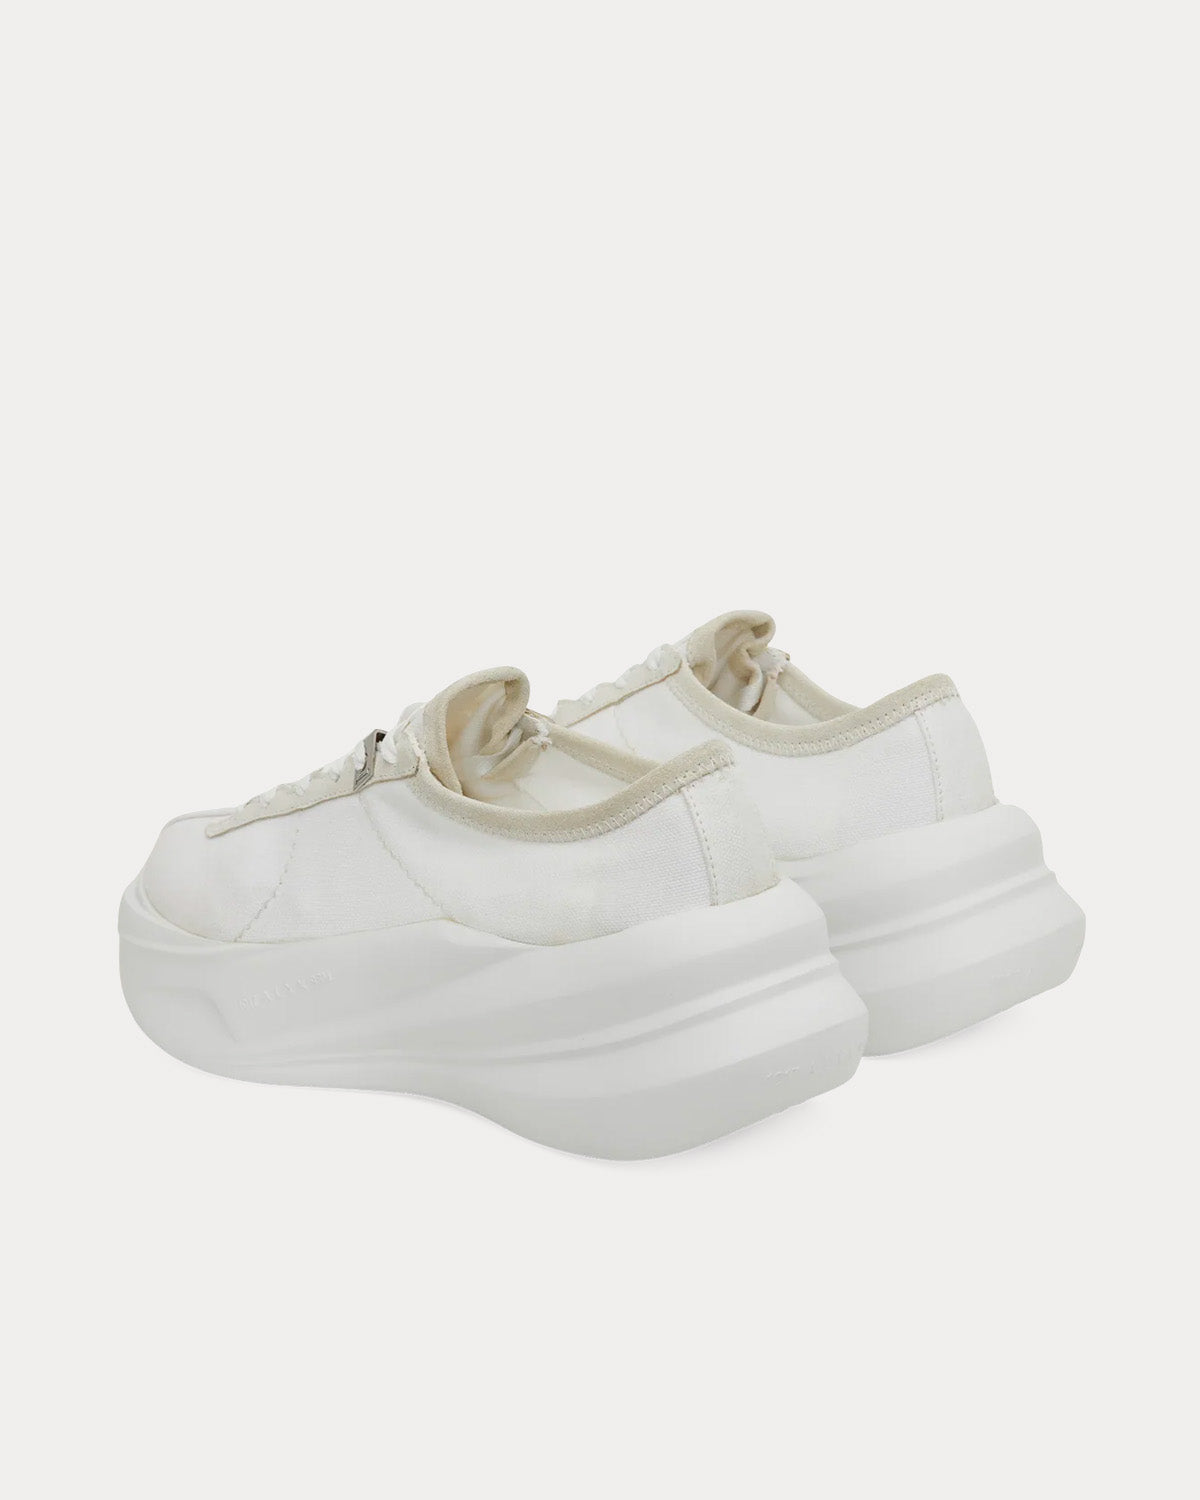 1017 ALYX 9SM - Aria White Low Top Sneakers